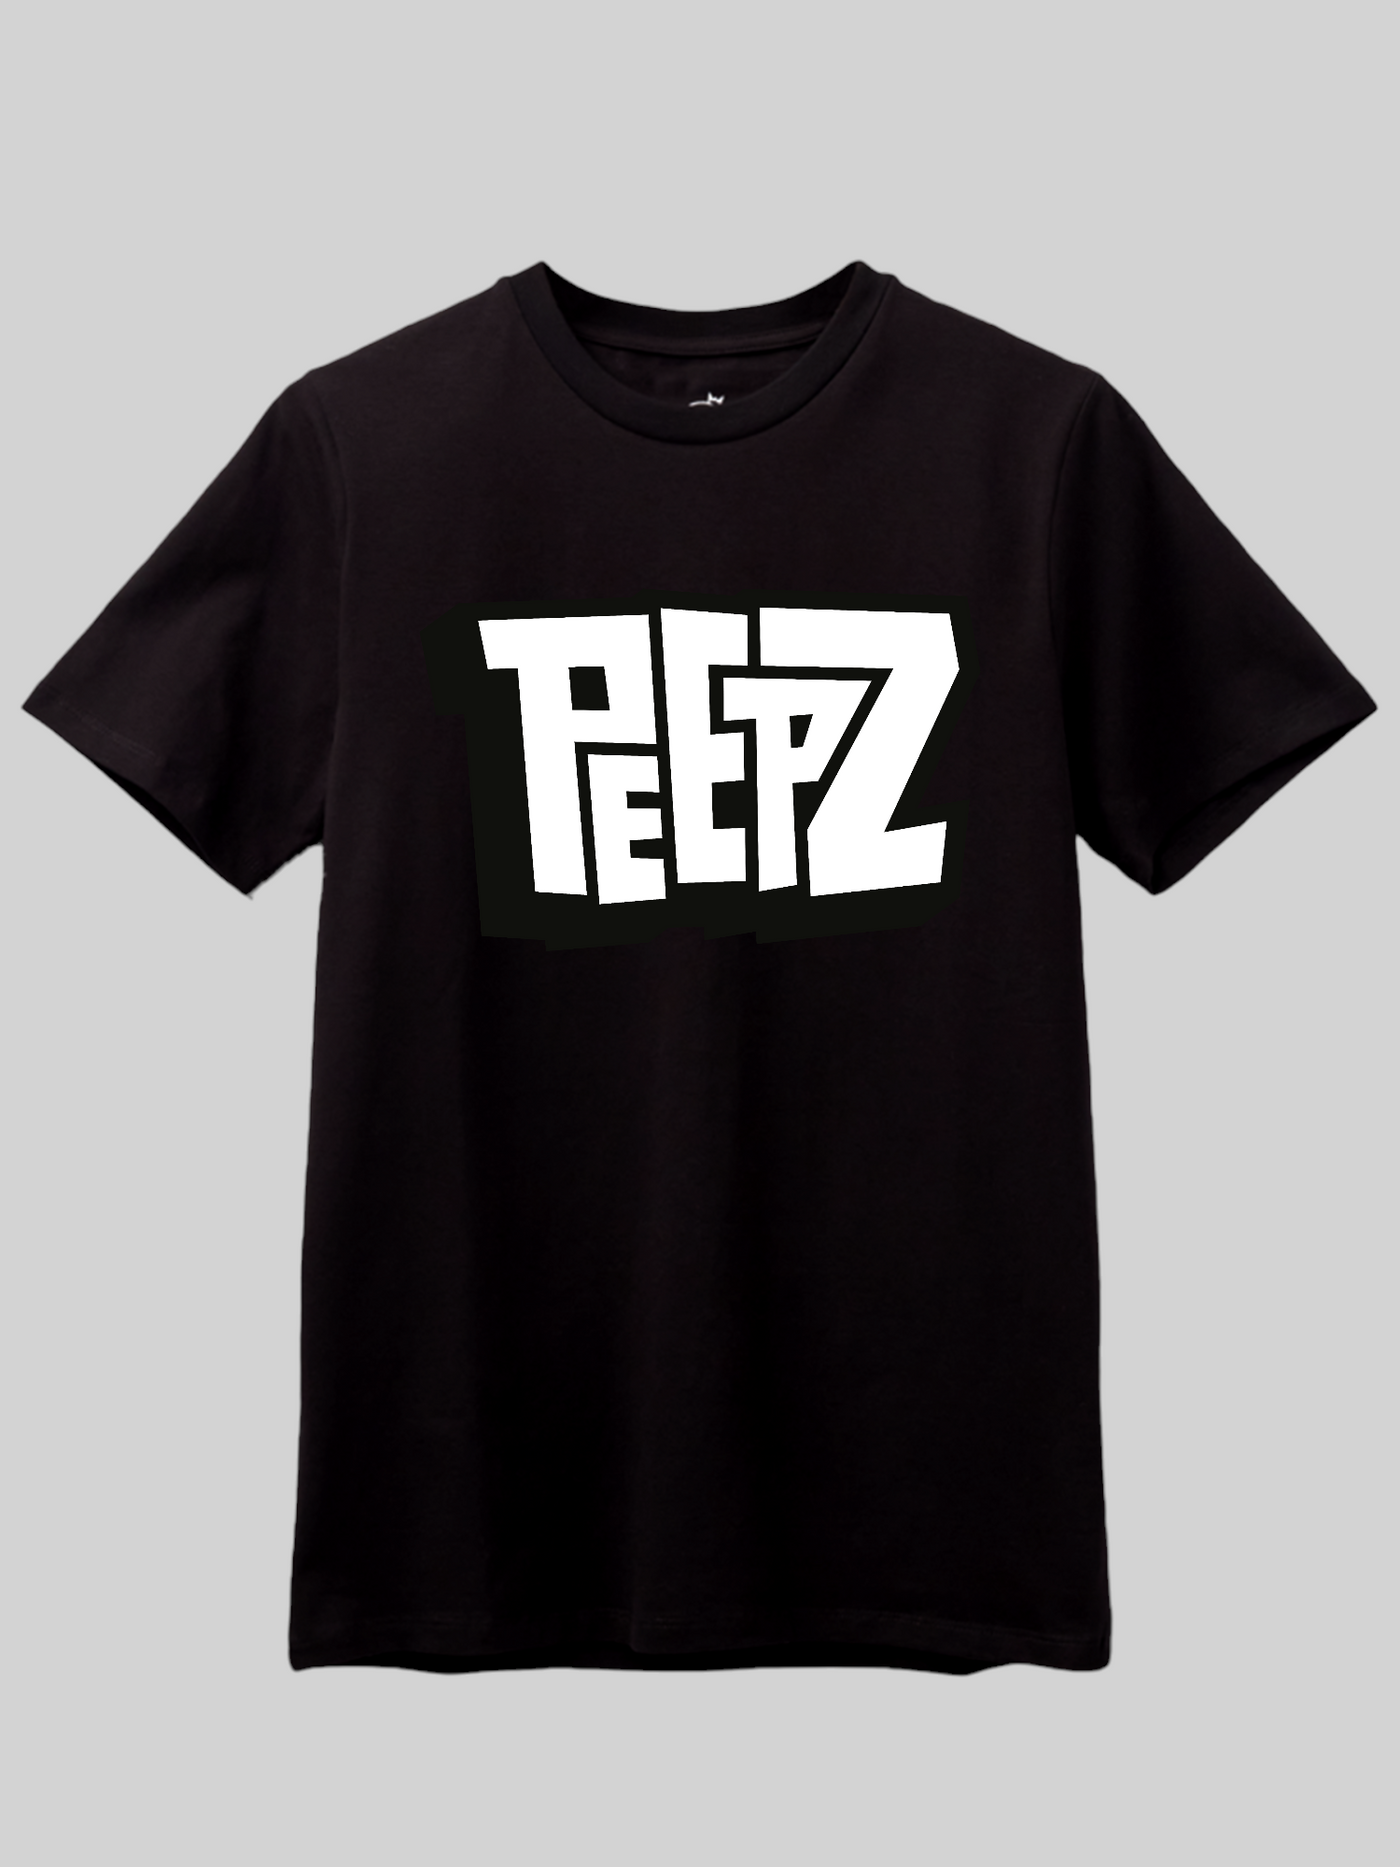 PEEPZ - t-shirt black